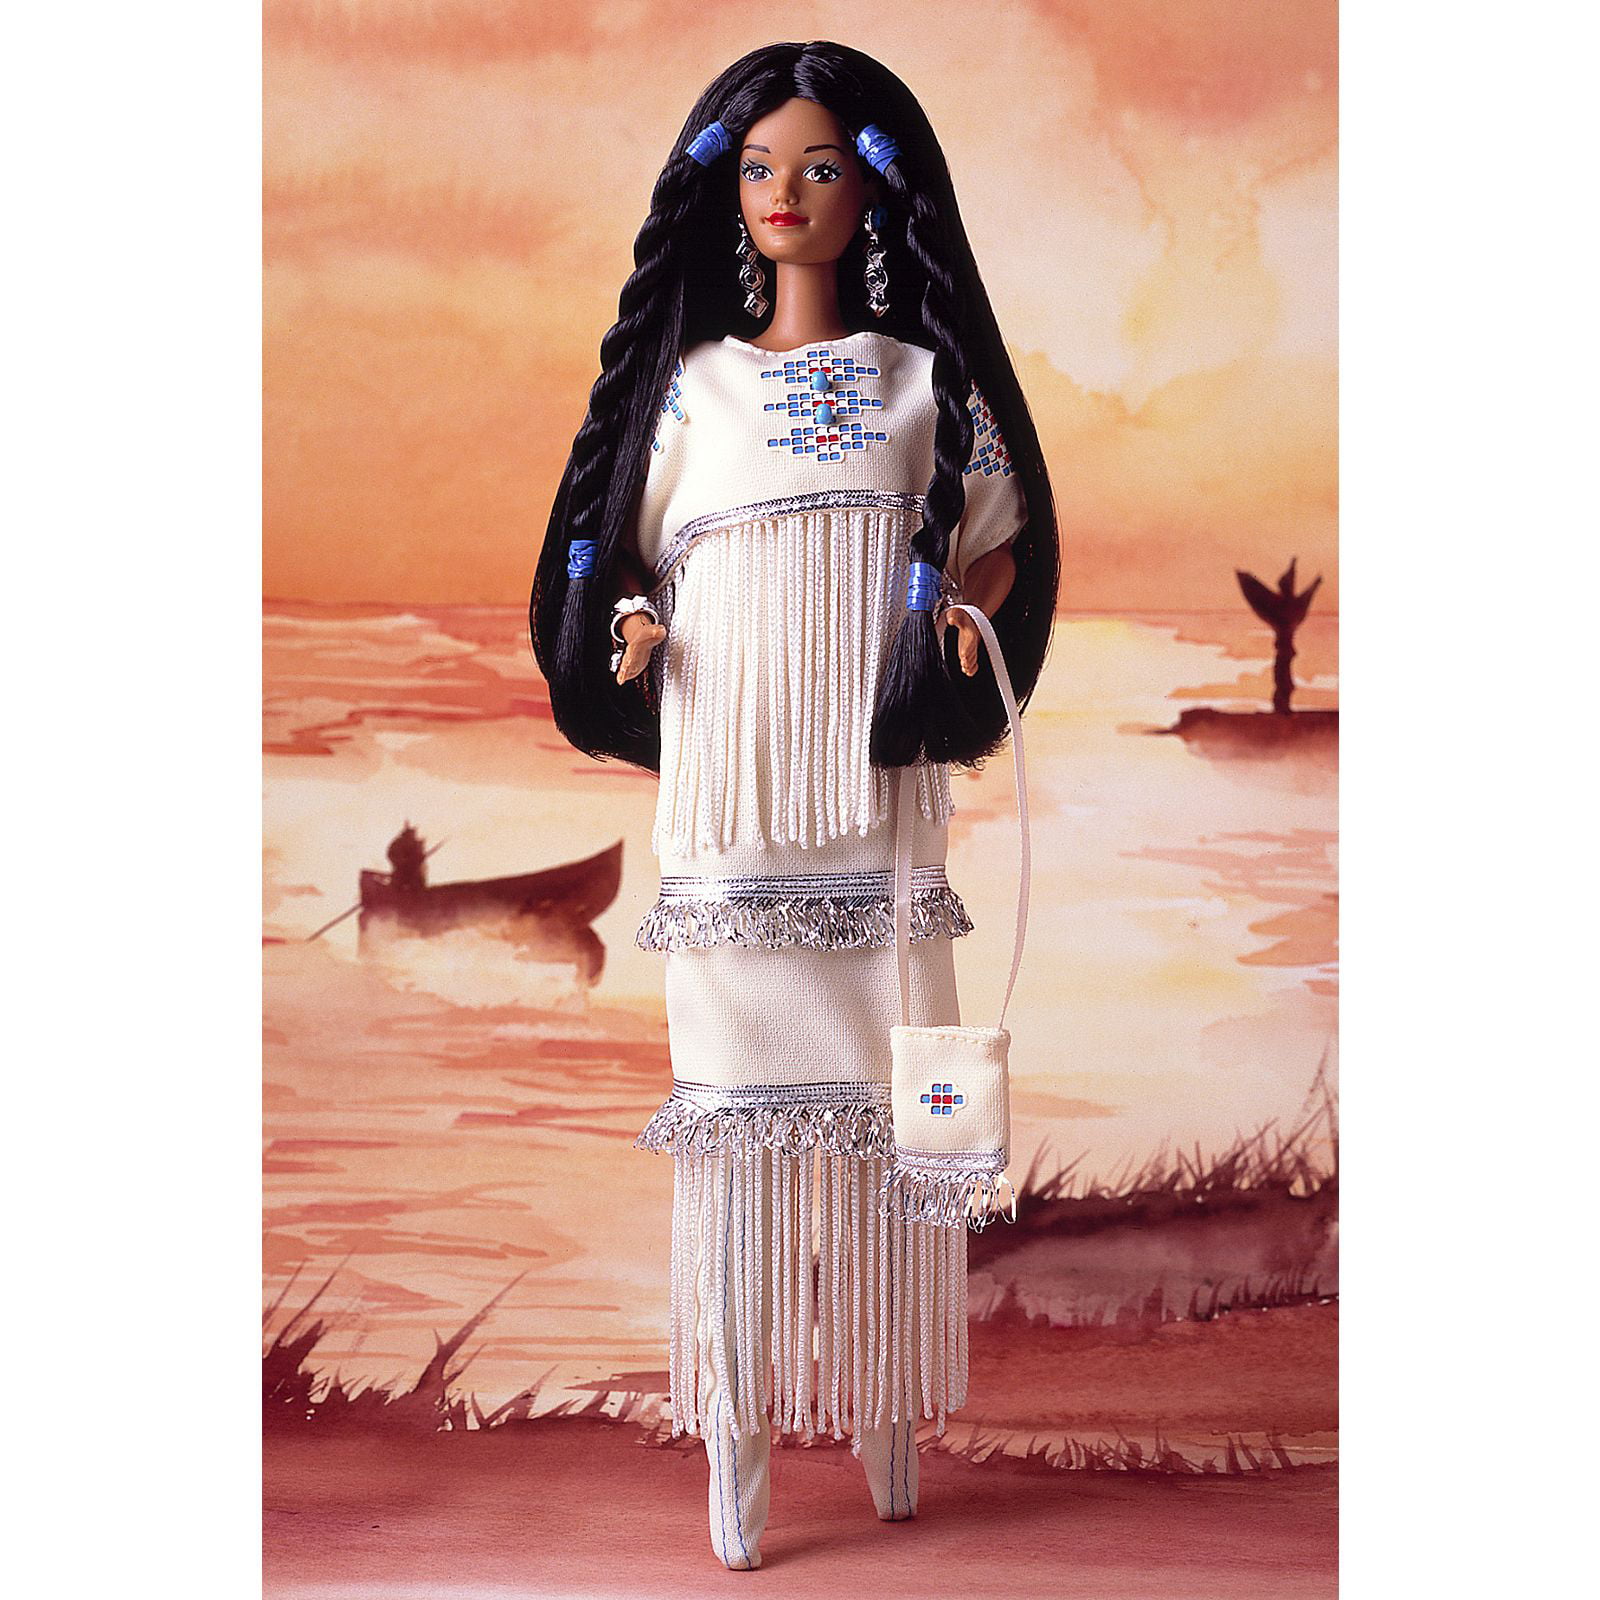 barbie native american doll, special edition - Walmart.com